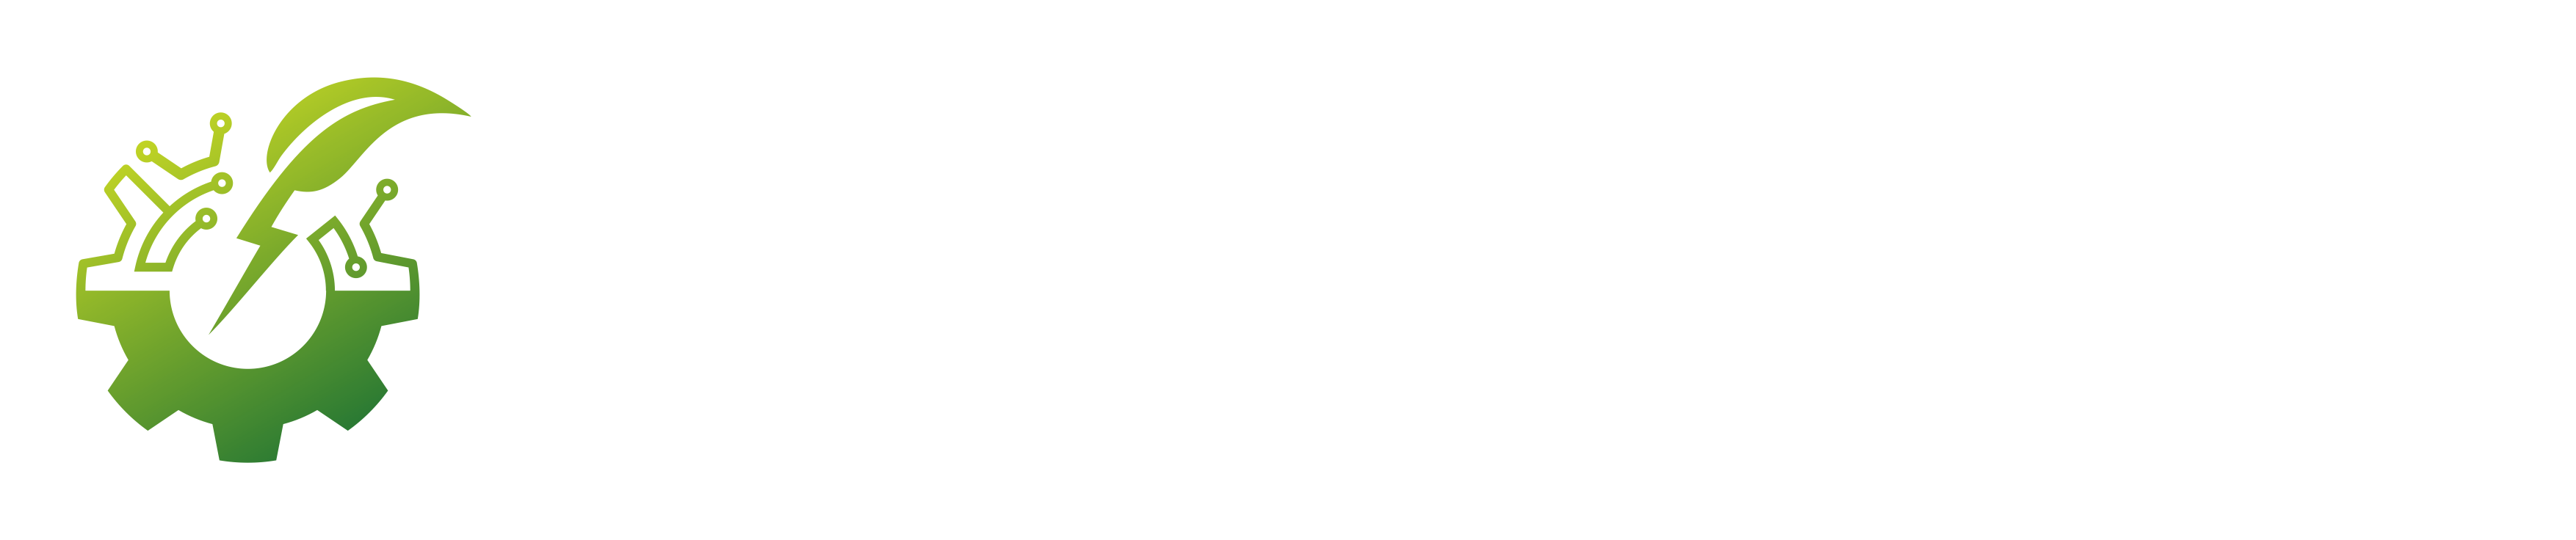 Digital Auto Future logo